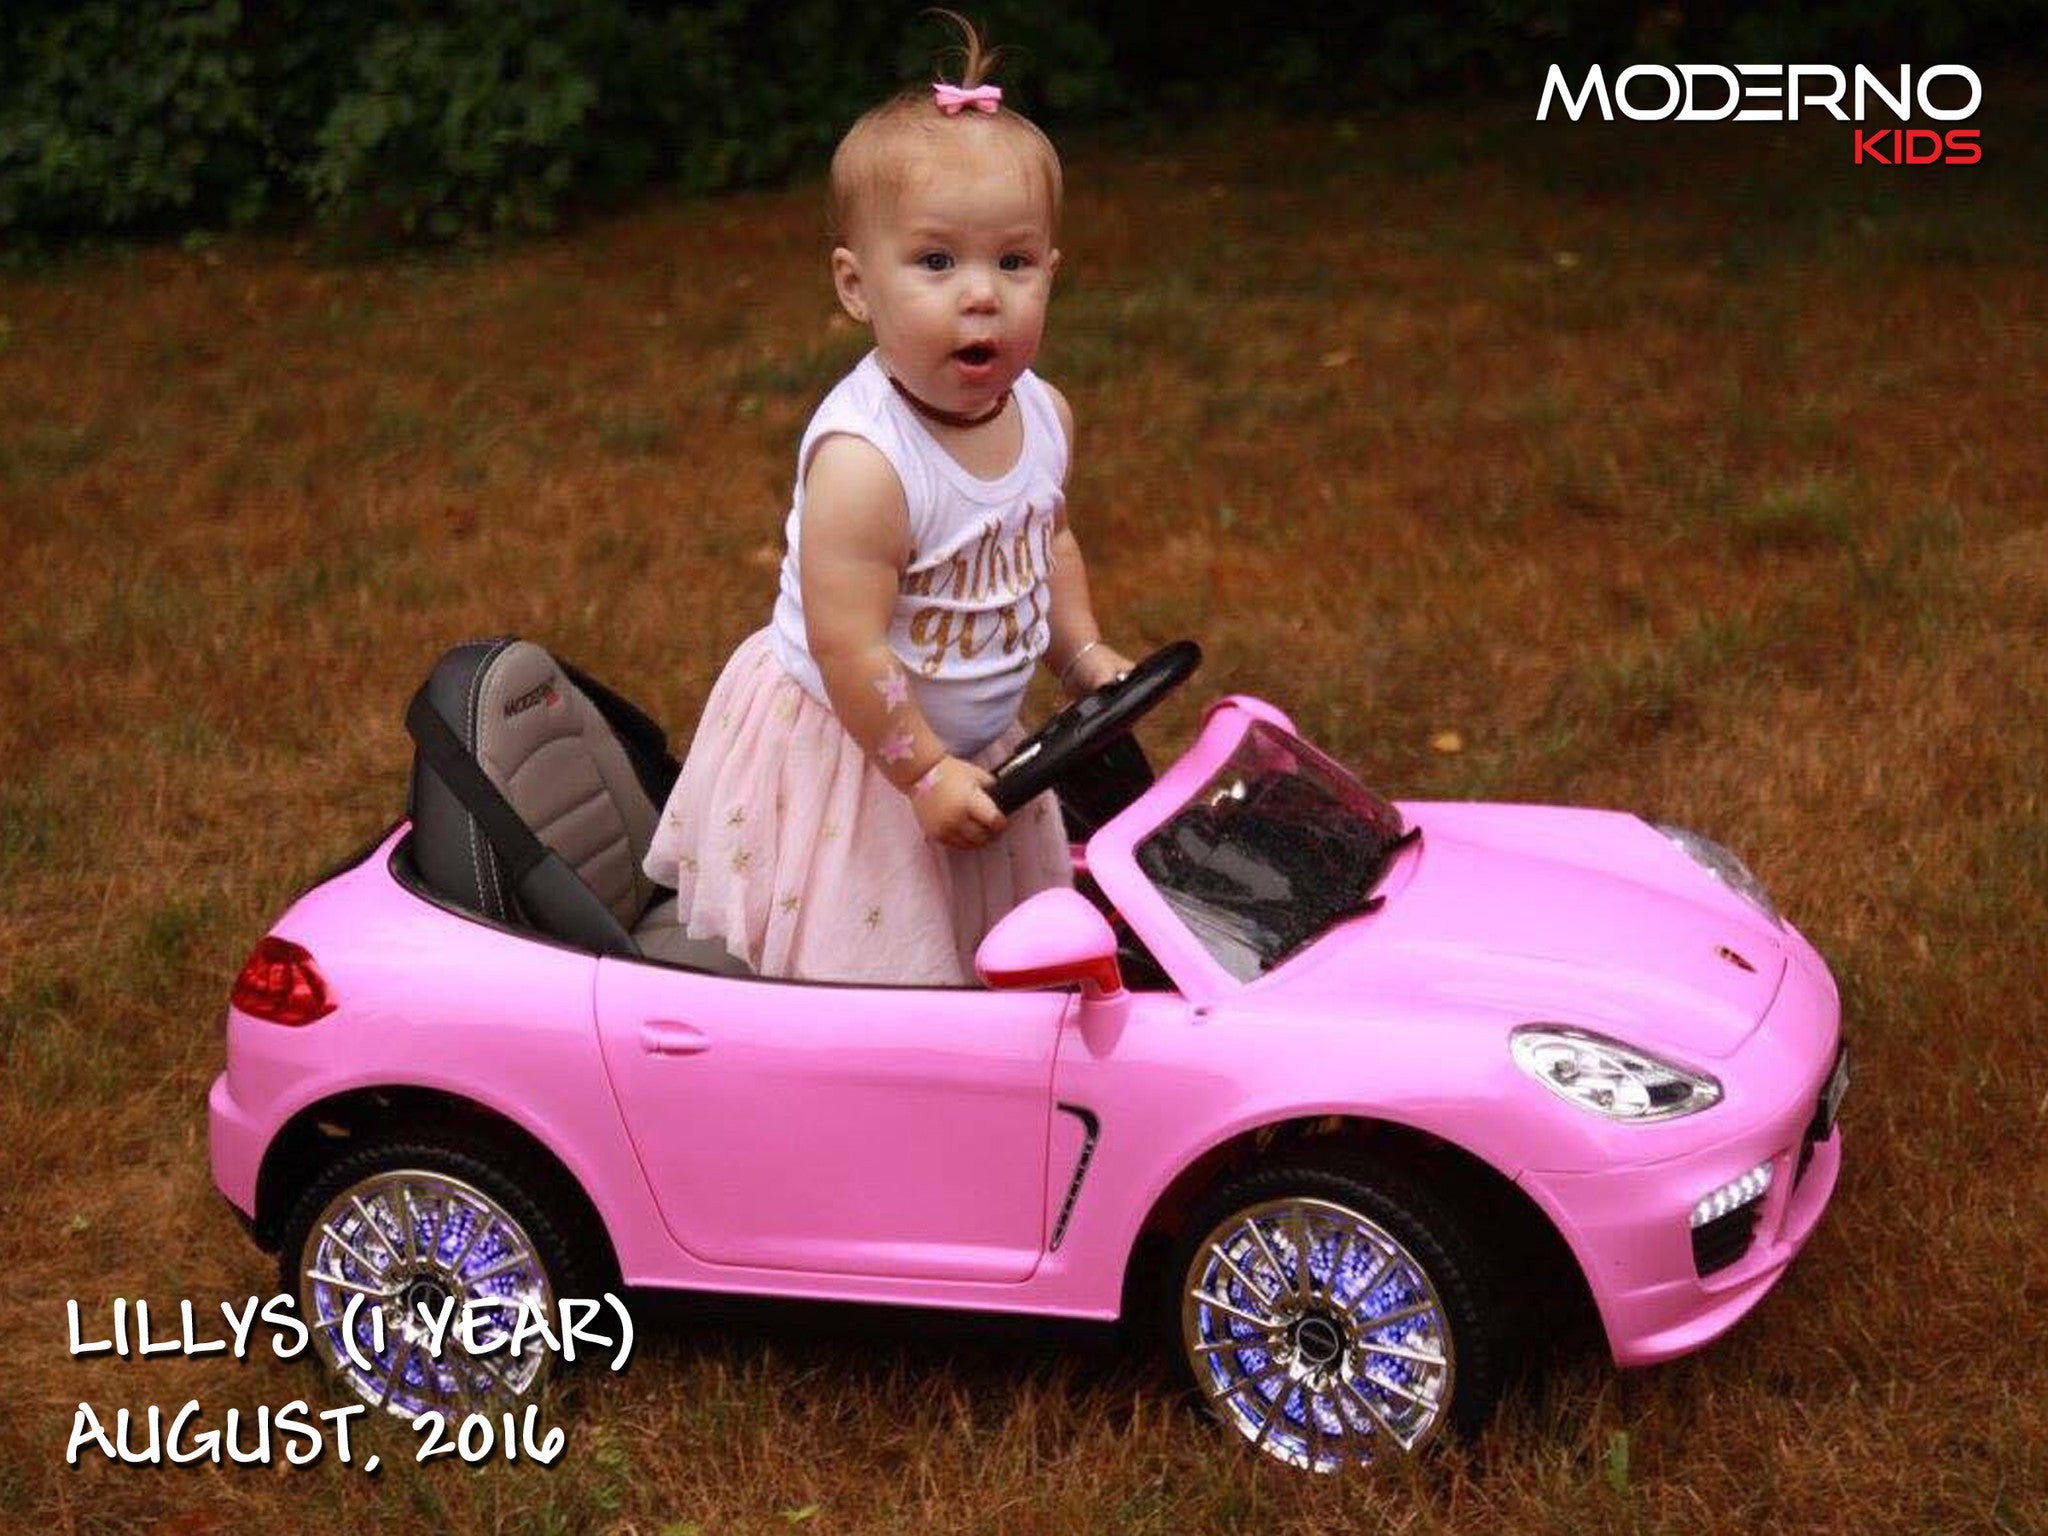 Kiddie Roadster 12v Kids Electric Ride-on Car With R/c Parental Remote | Pink